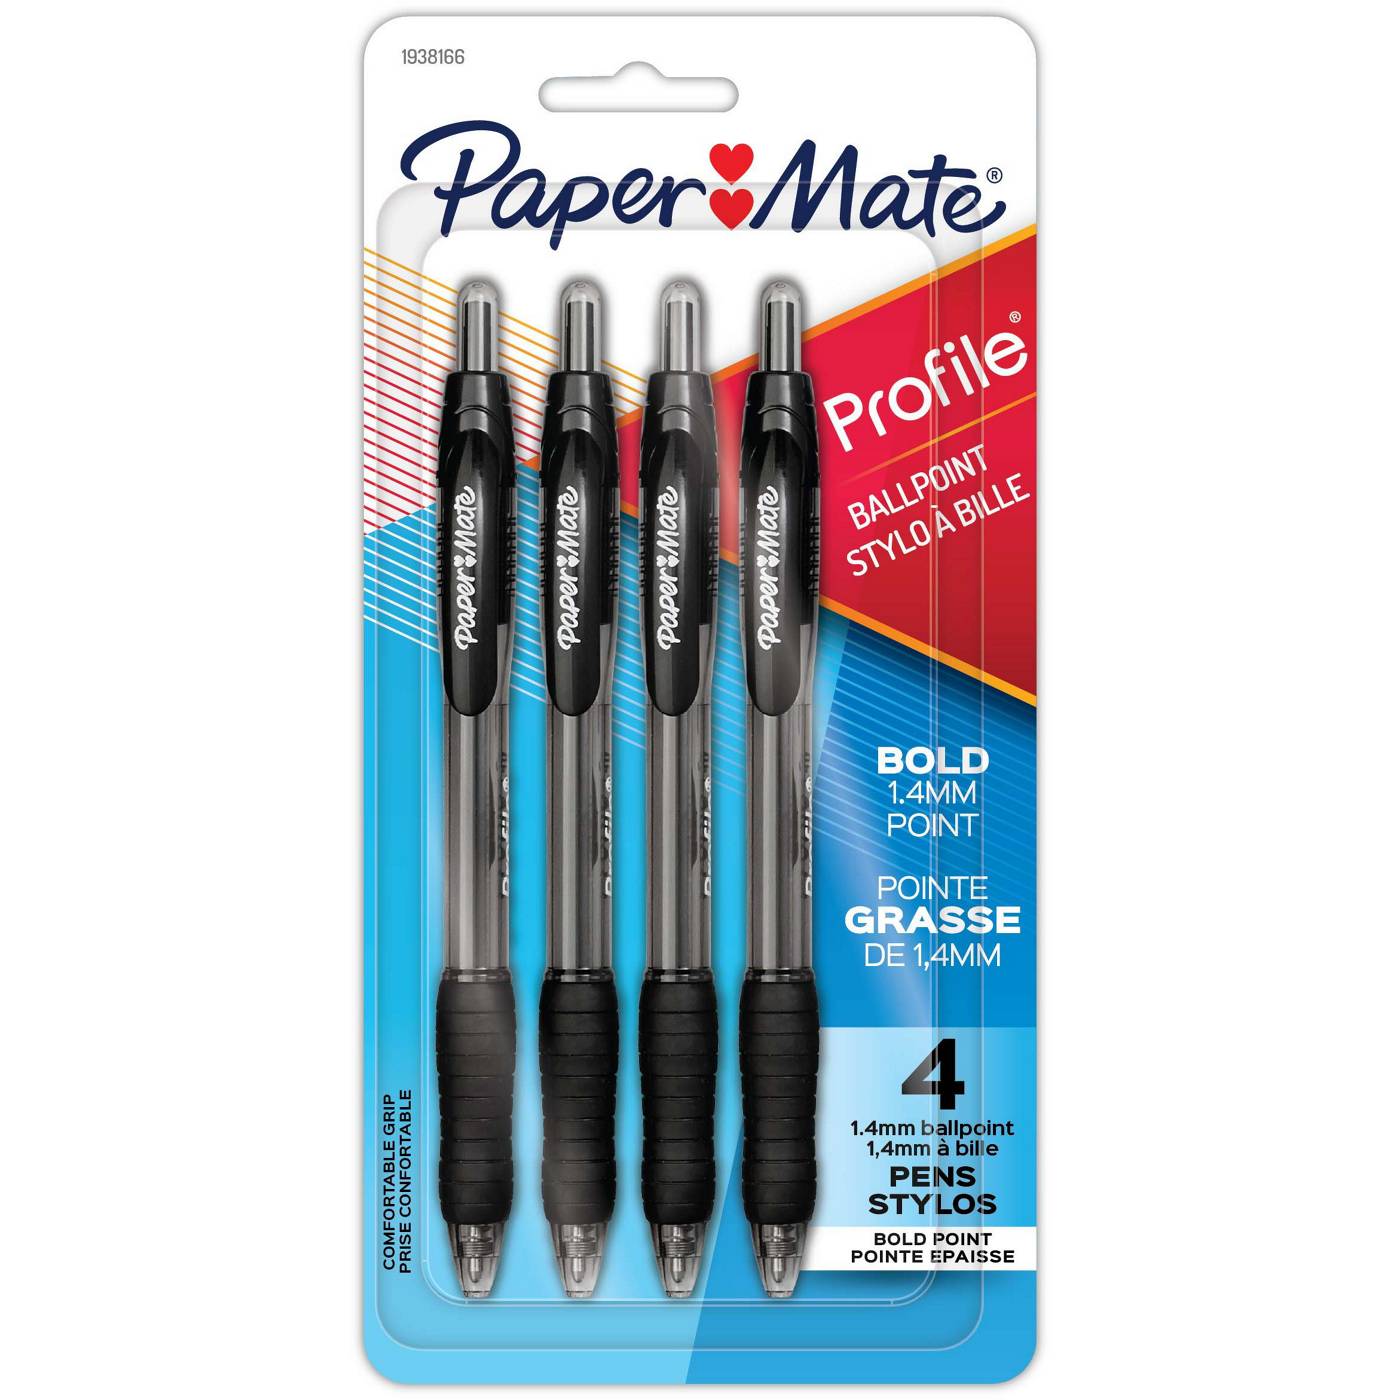 Paper Mate Profile 1.4mm Ballpoint Pens - Black Ink; image 1 of 2